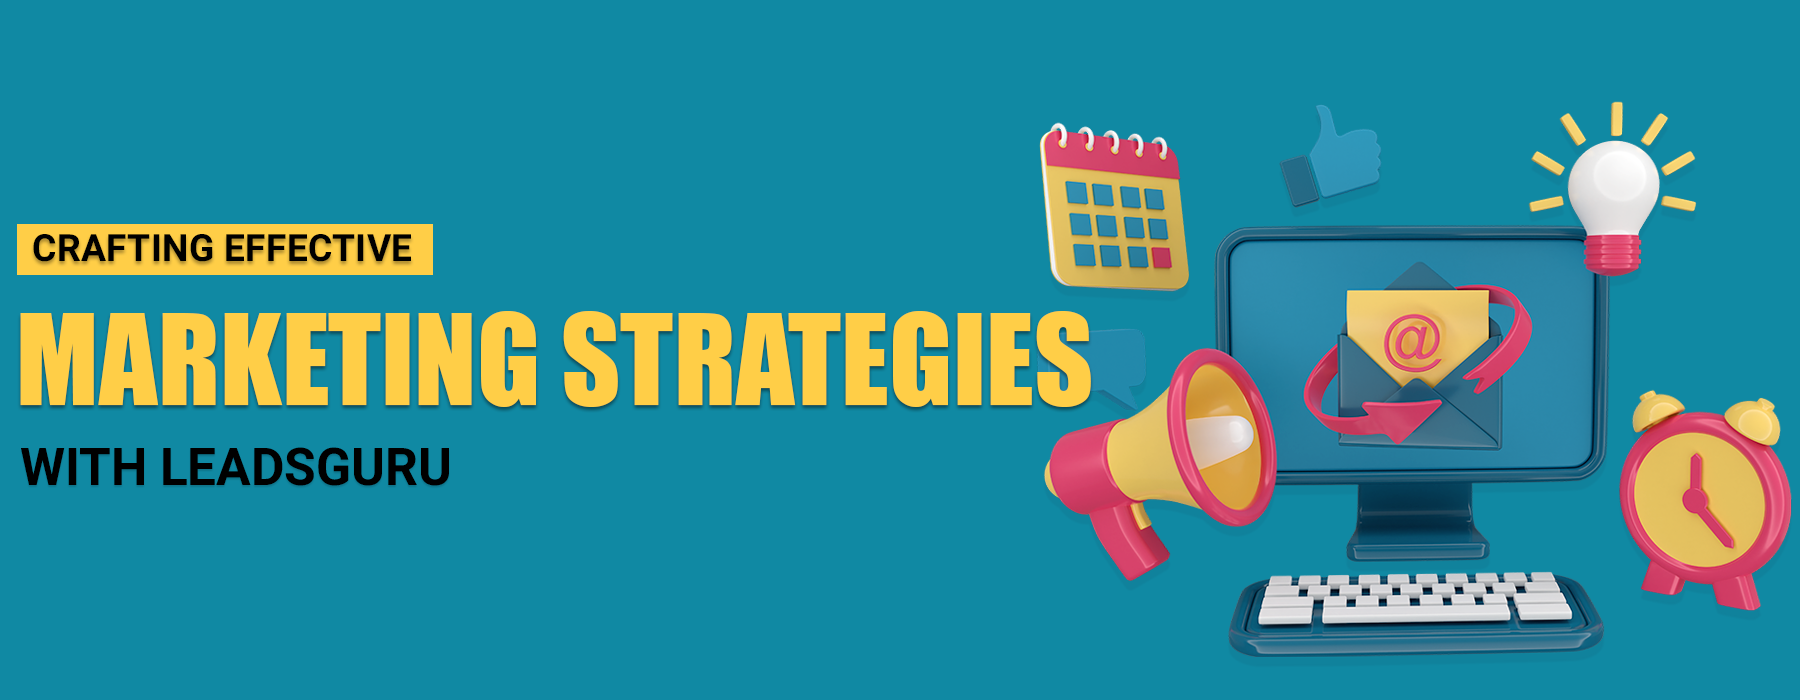 Crafting Effective Marketing Strategies with LeadsGuru